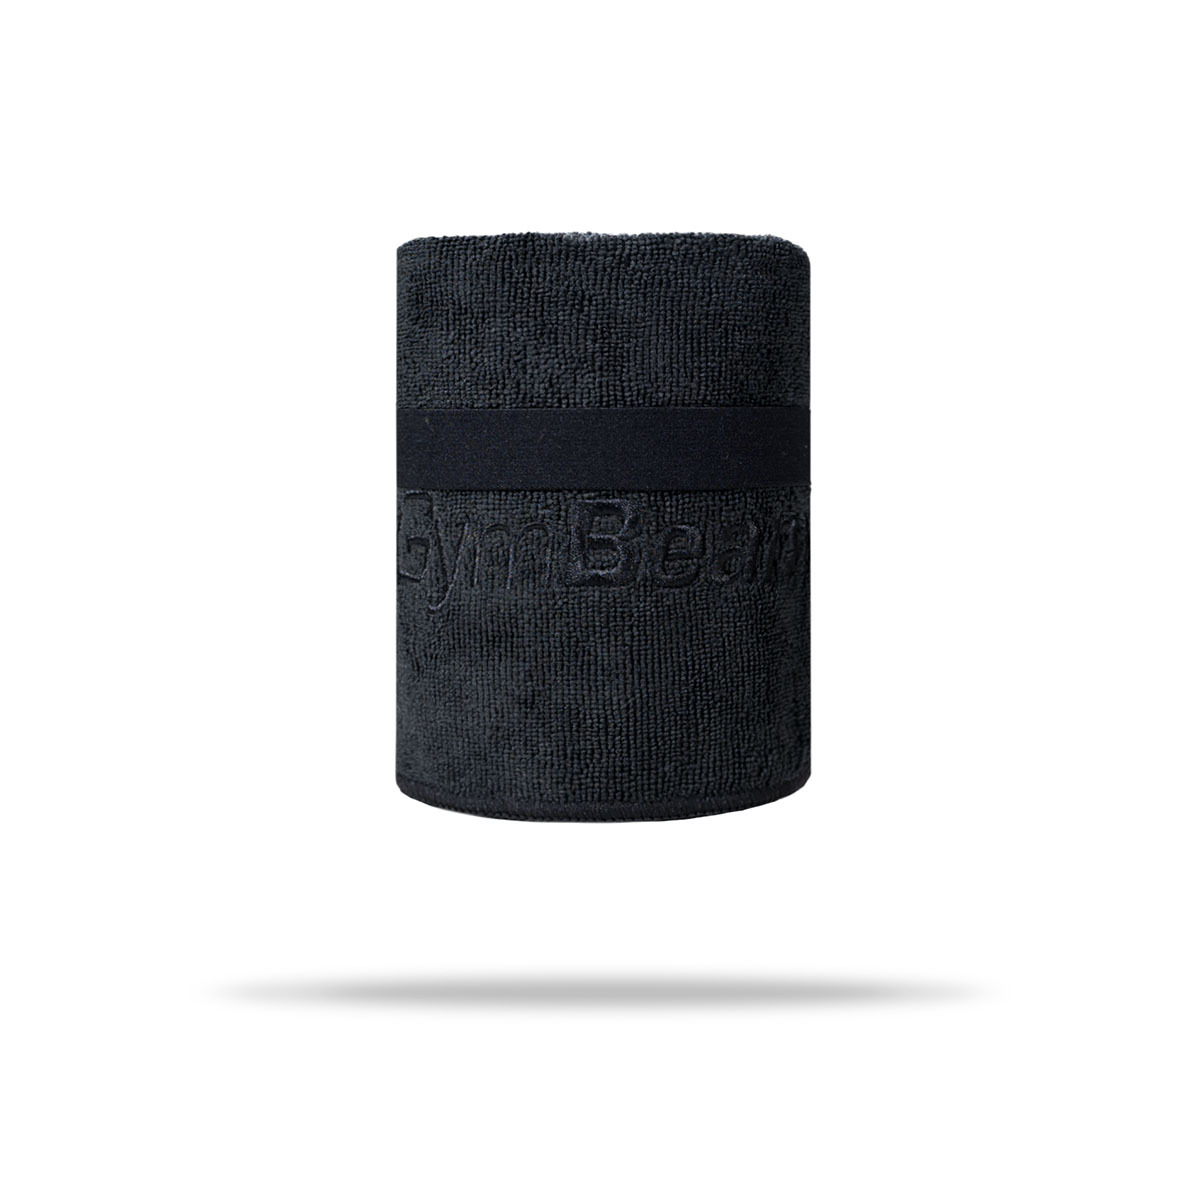 Sportovní ručník z mikrovlákna Medium Black - GymBeam černá